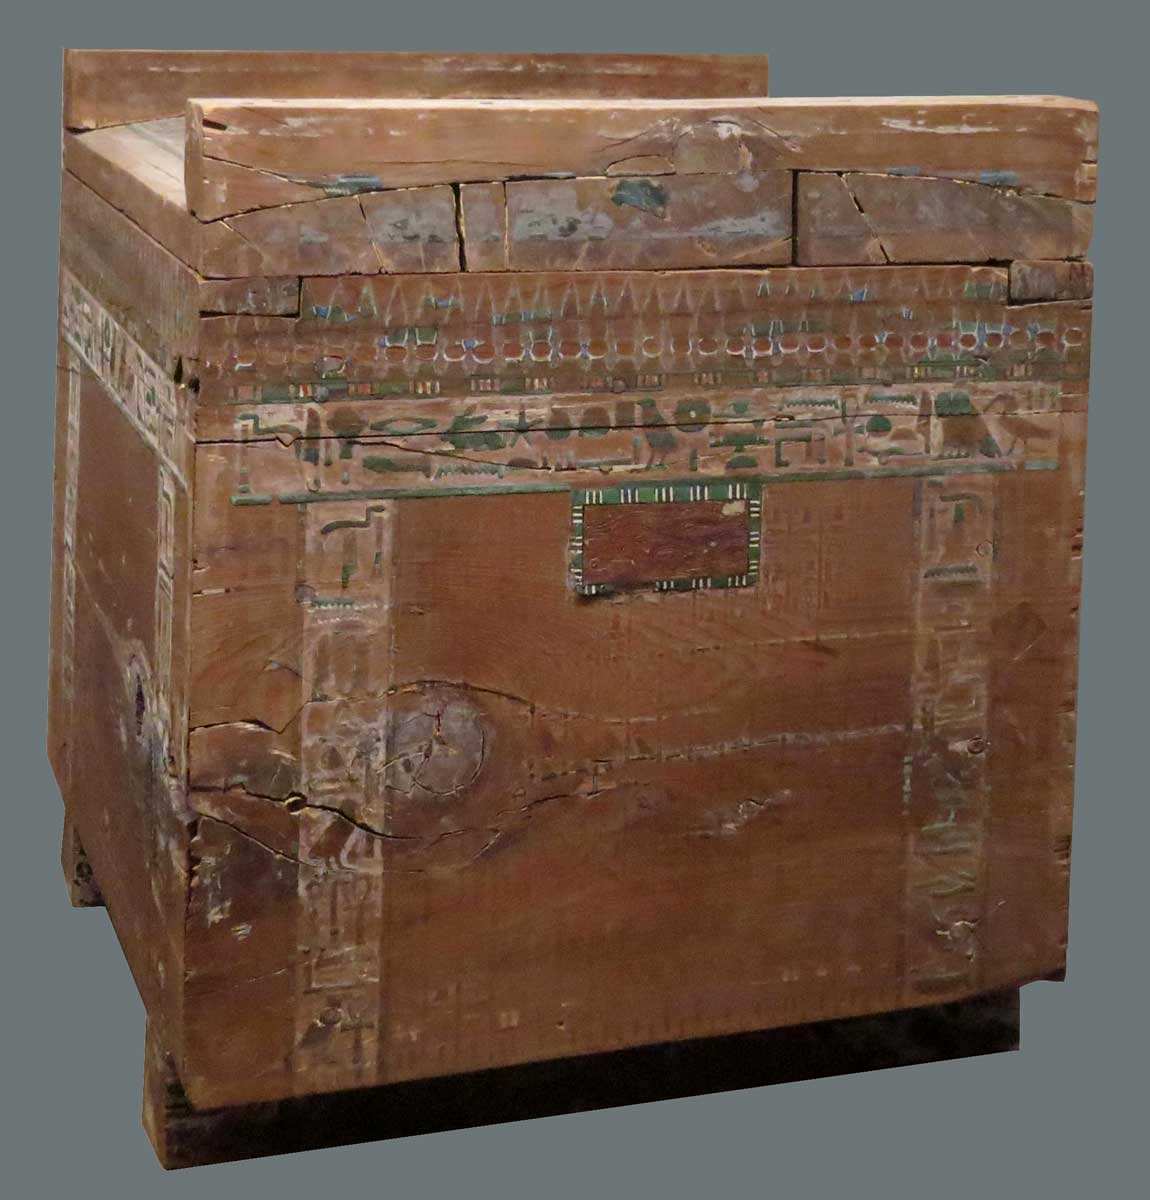 wooden chest canopic jars hapyankhtify dynasty twelve middle kingdom egypt